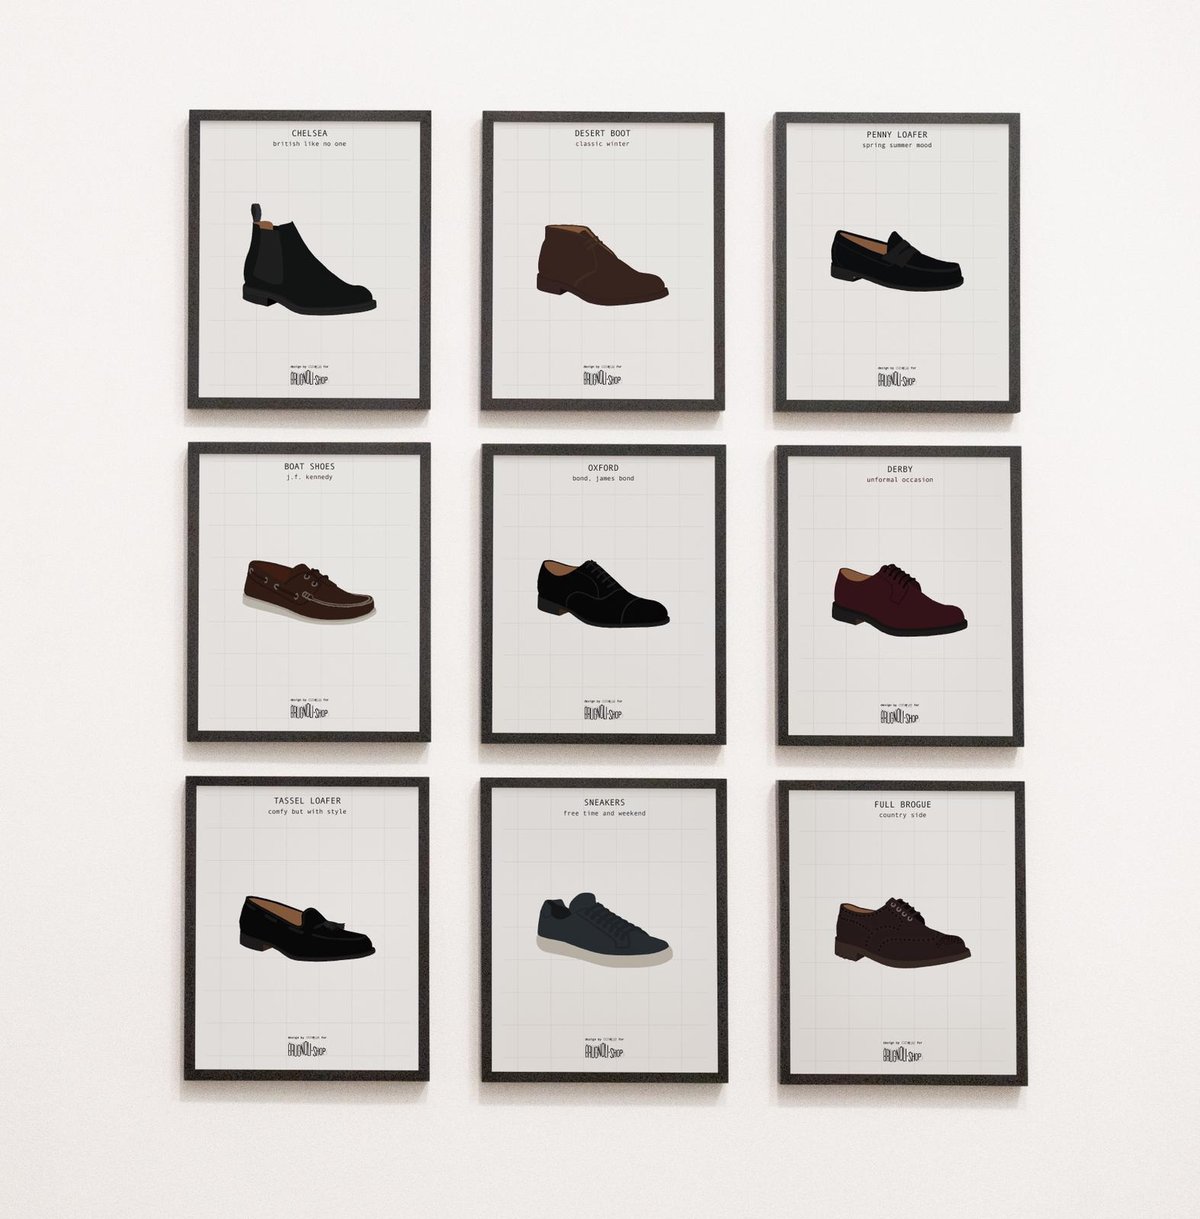 Image of Shoes portrait by Cinquecentimetri x Brugnoli